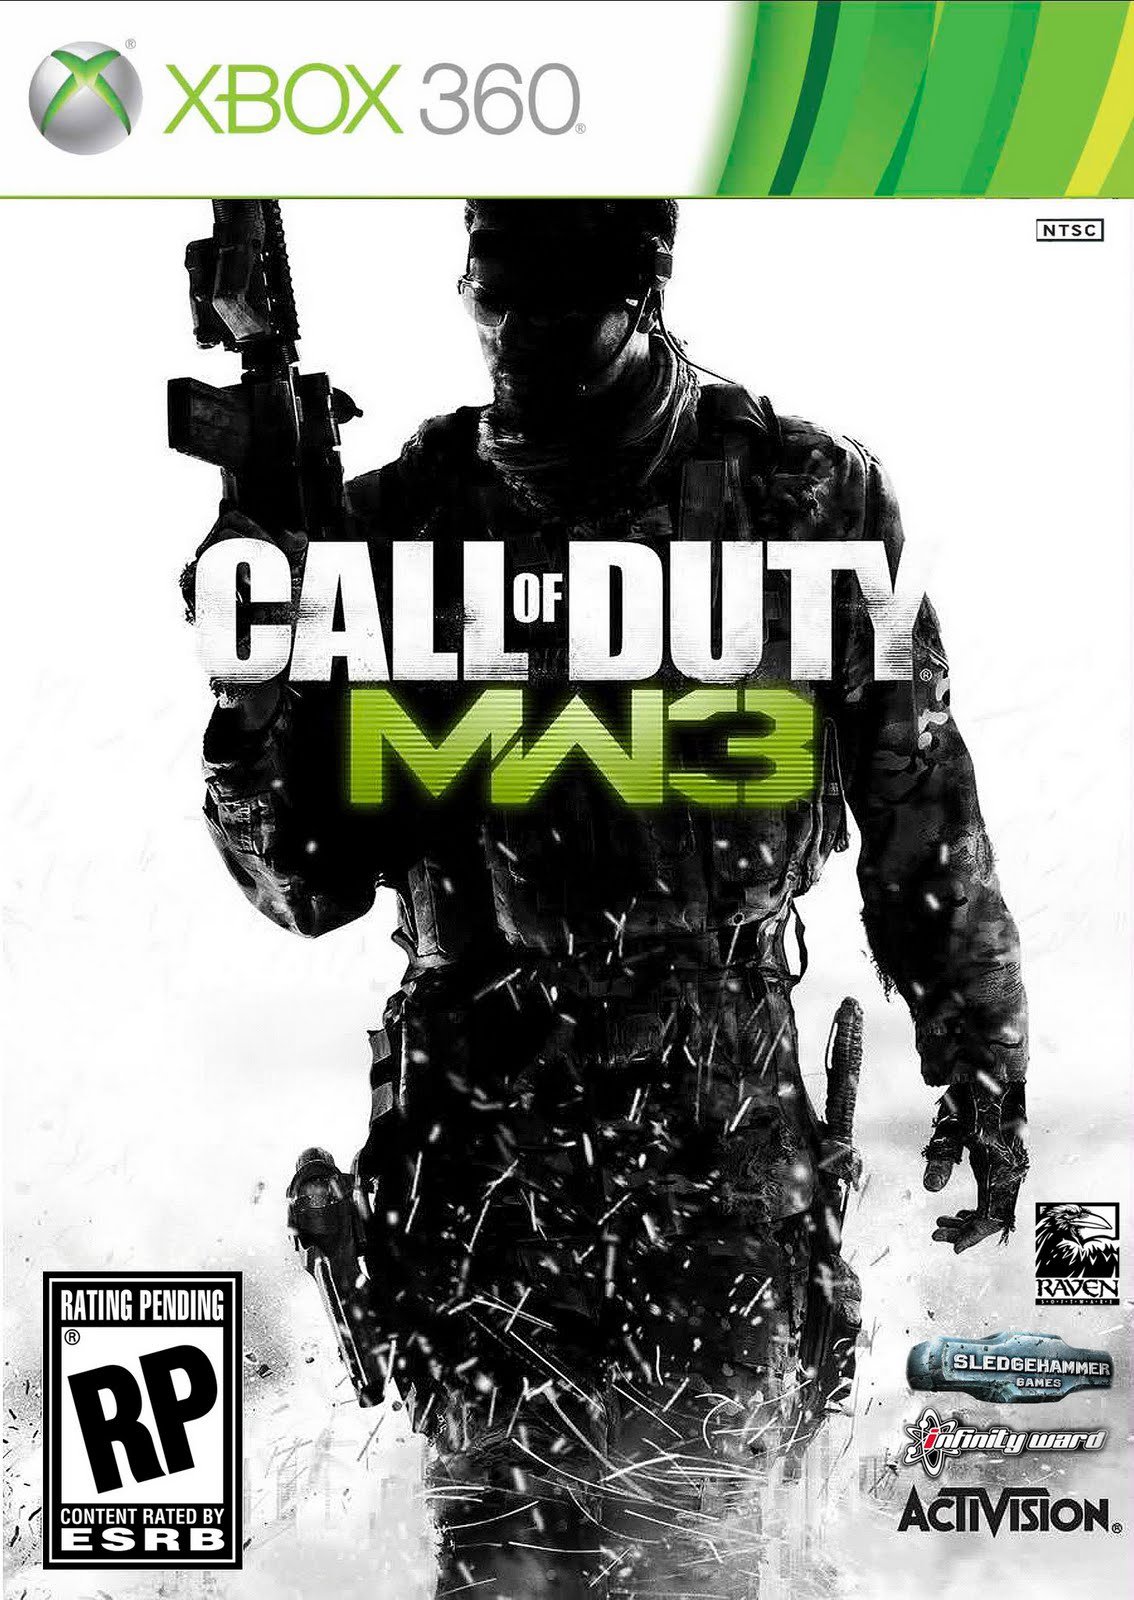 Call of duty xbox game. Модерн варфаер 3 Xbox 360. Cod mw3 Xbox 360. Call of Duty Modern Warfare 3 Xbox 360 обложка. Call of Duty на иксбокс 360.